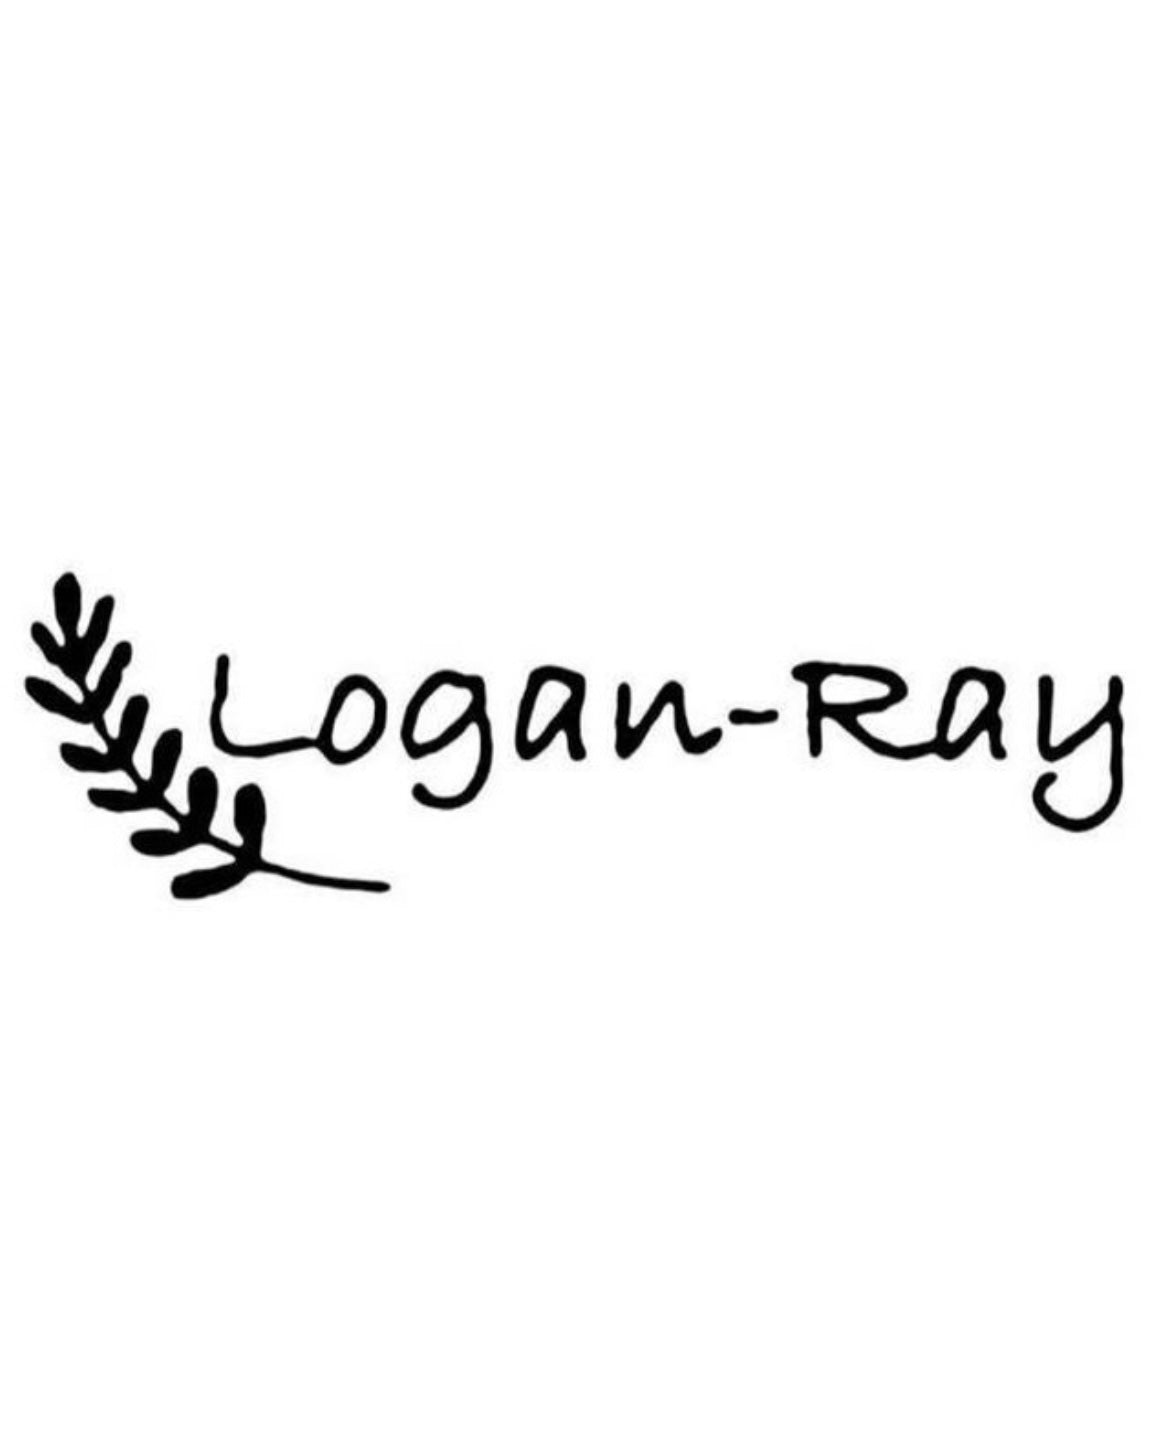 Logan Ray Collection